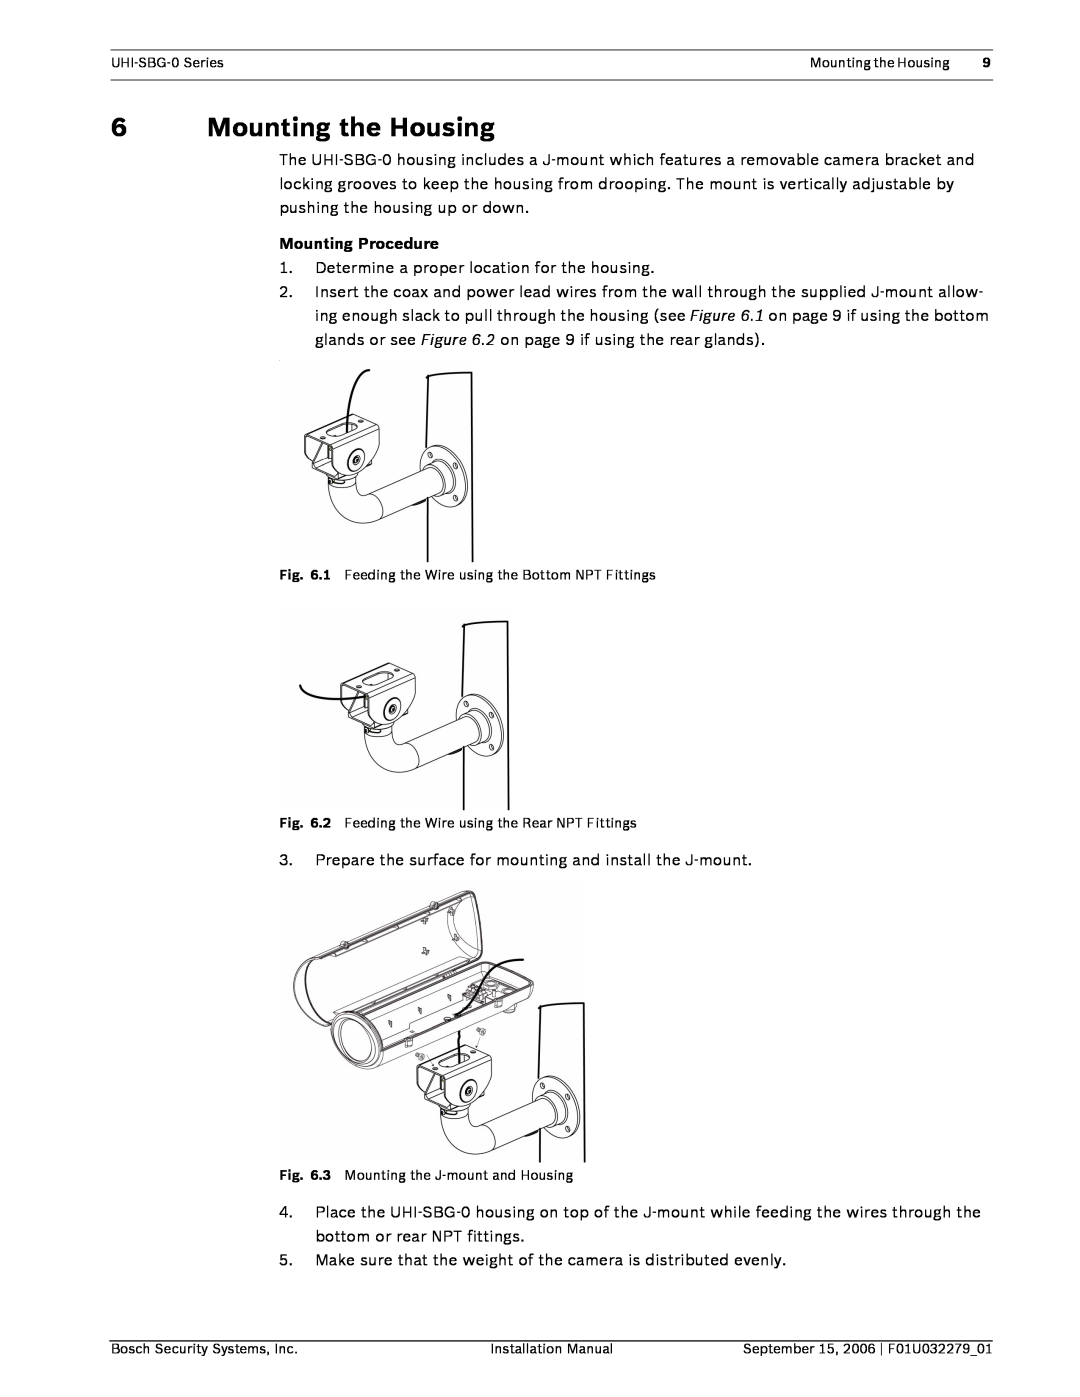 Bosch Appliances UHI-SBG-0 installation manual Mounting the Housing, Mounting Procedure 